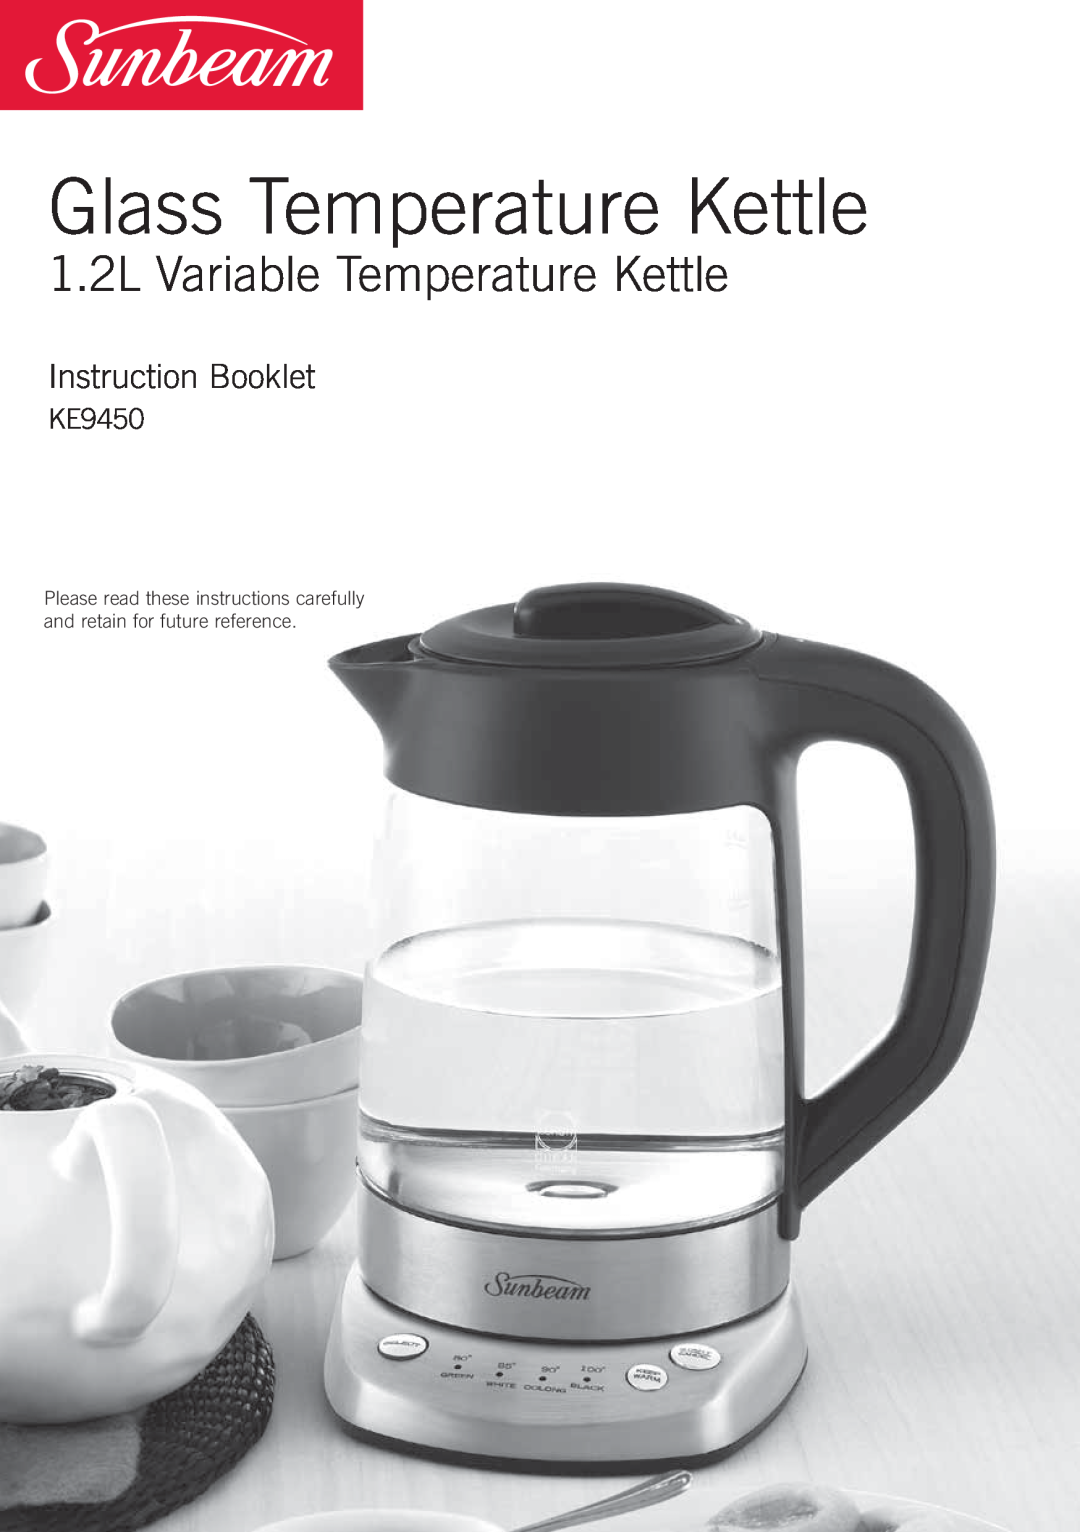 Sunbeam KE9450 manual Glass Temperature Kettle, 1.2L Variable Temperature Kettle, Instruction Booklet 